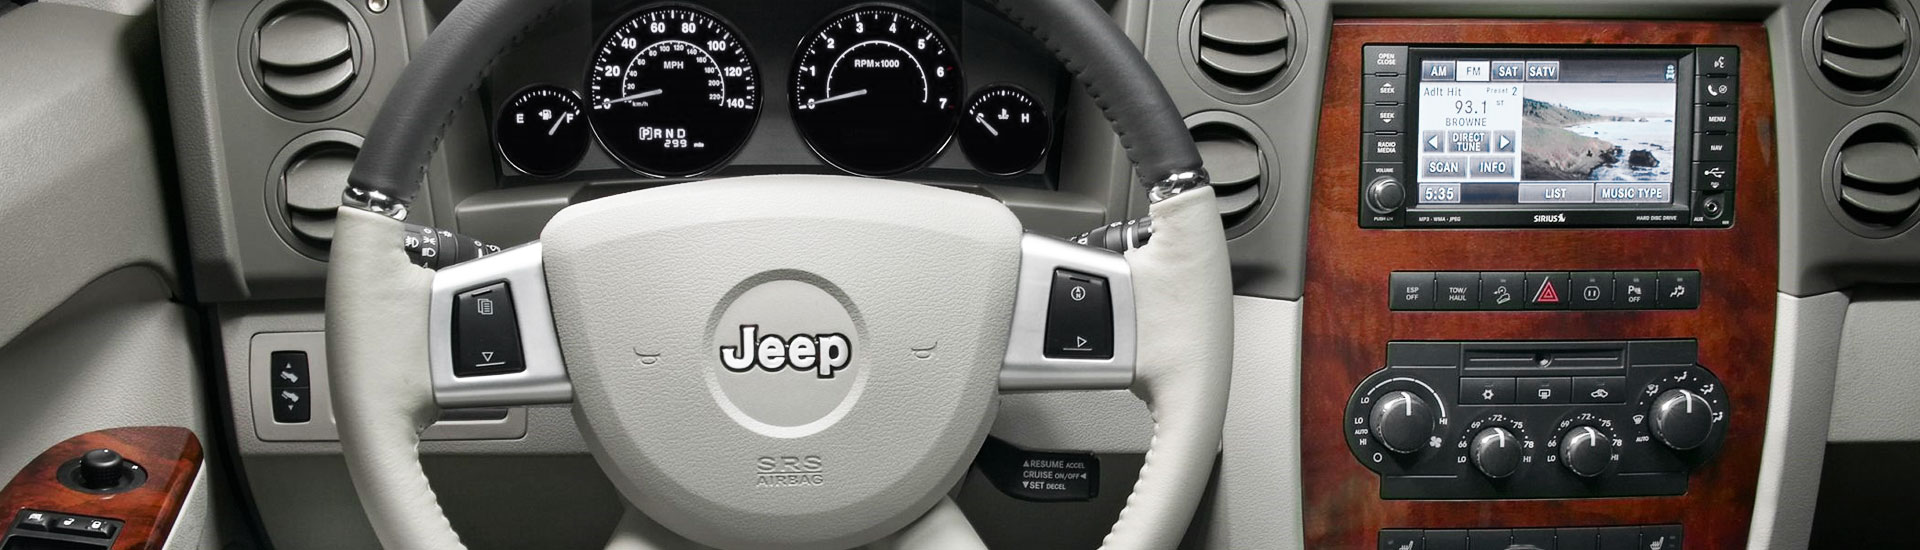 2013 Jeep Grand Cherokee Custom Dash Kits